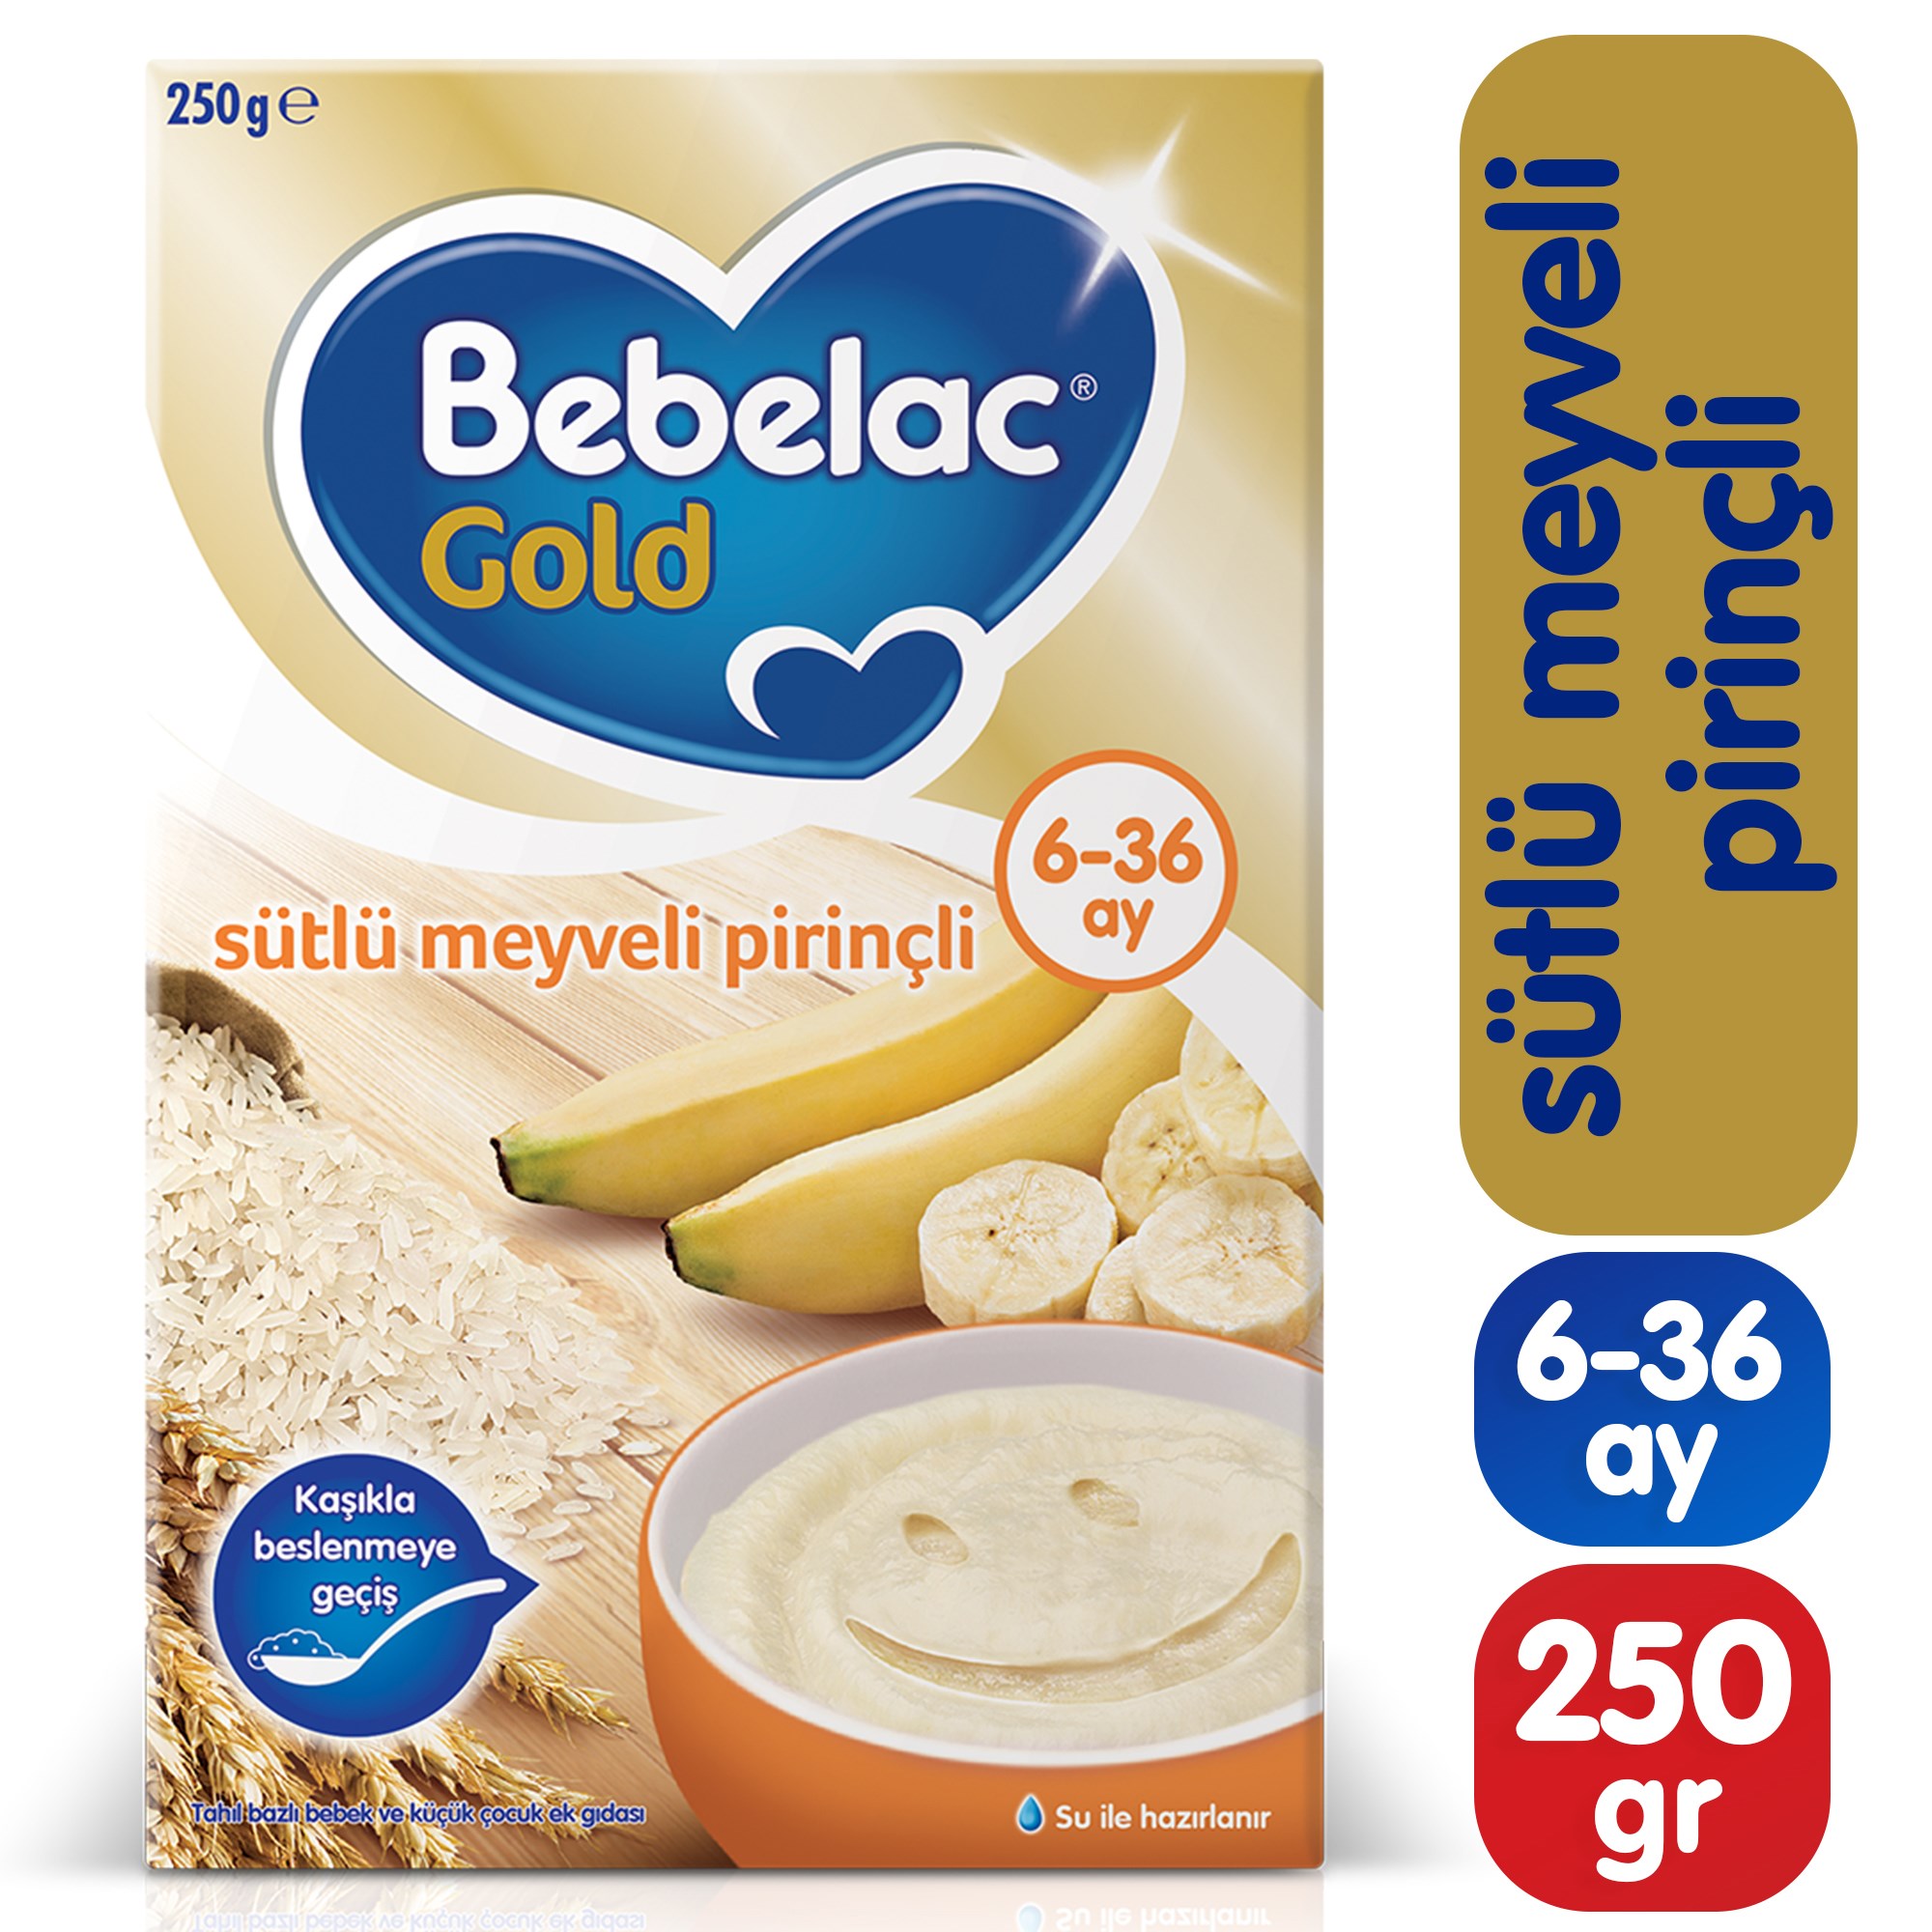 Bebelac Gold Sütlü Meyveli Pirinçli Kaşık Maması 250 g 